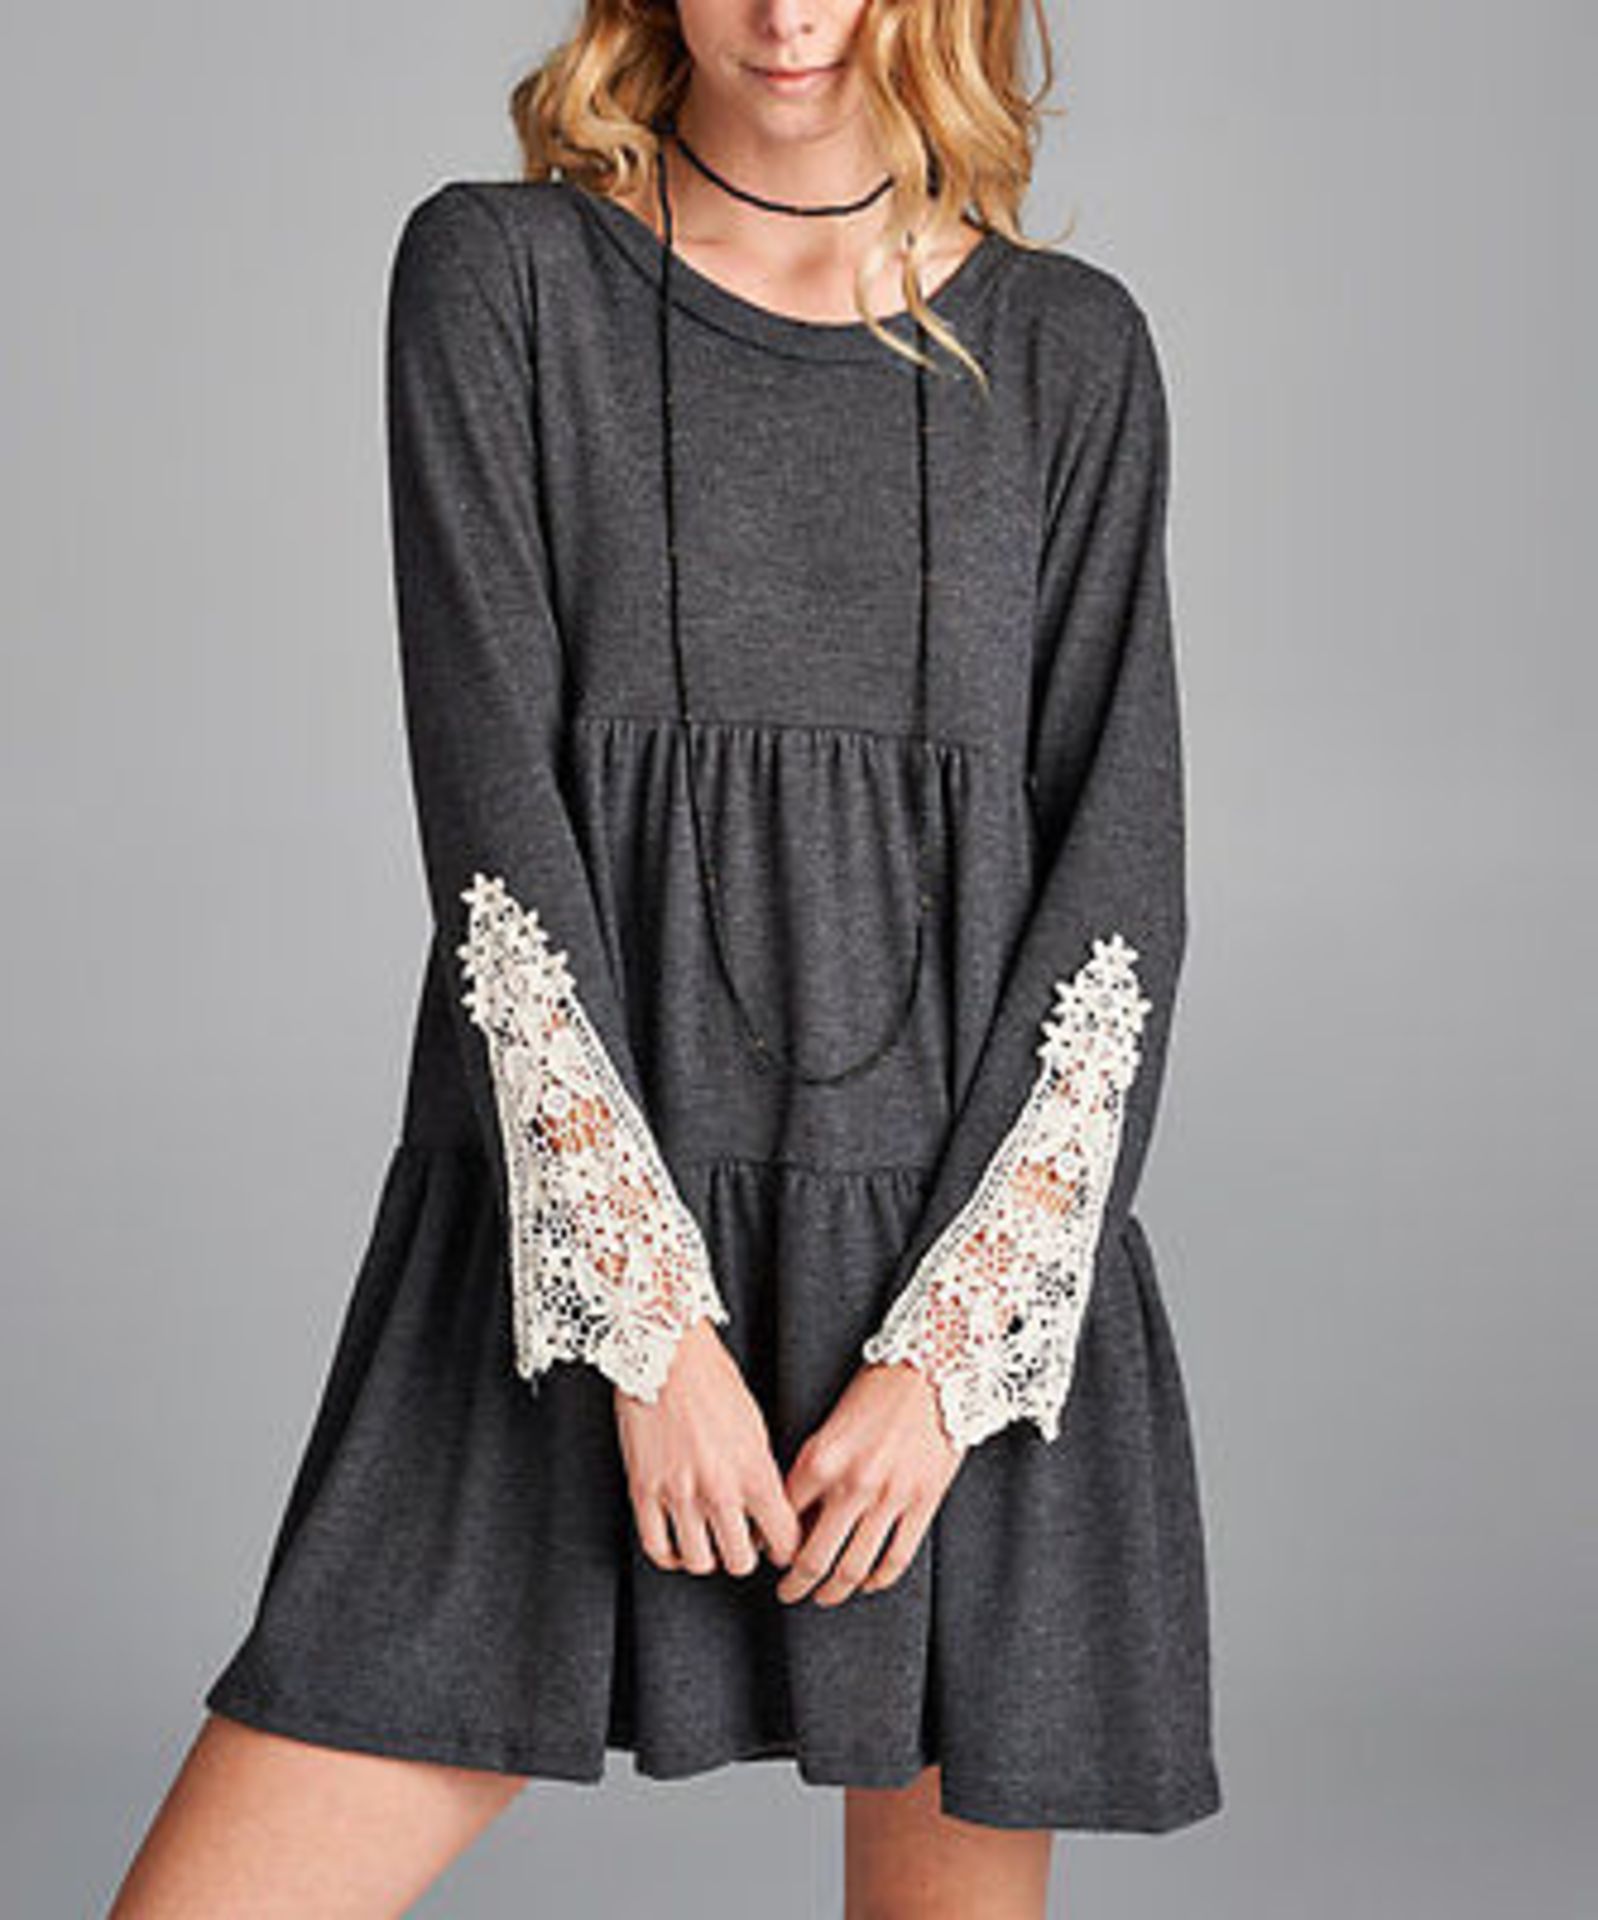 Charcoal Crochet-Sleeve Swing Dress (US S/UK 8/EU 36) (New with tags) [Ref: 44823101- T-4]